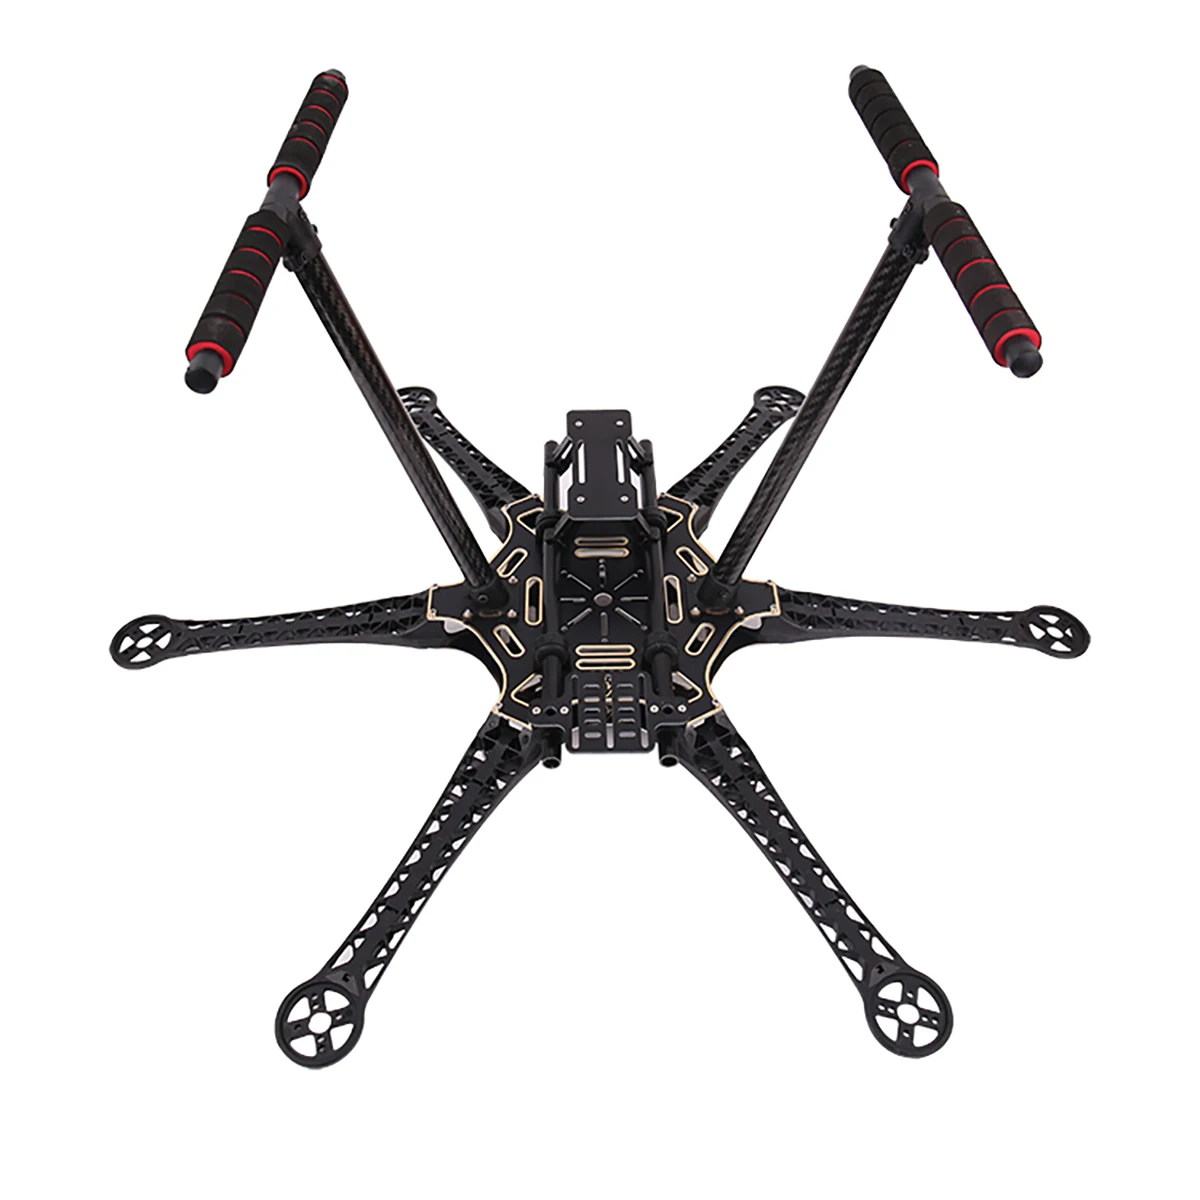 

S550 F550 500 Upgrade Hexacopter Frame Kit with Unflodable Landing Gear for FPV DIY Multirotor FPV Drone